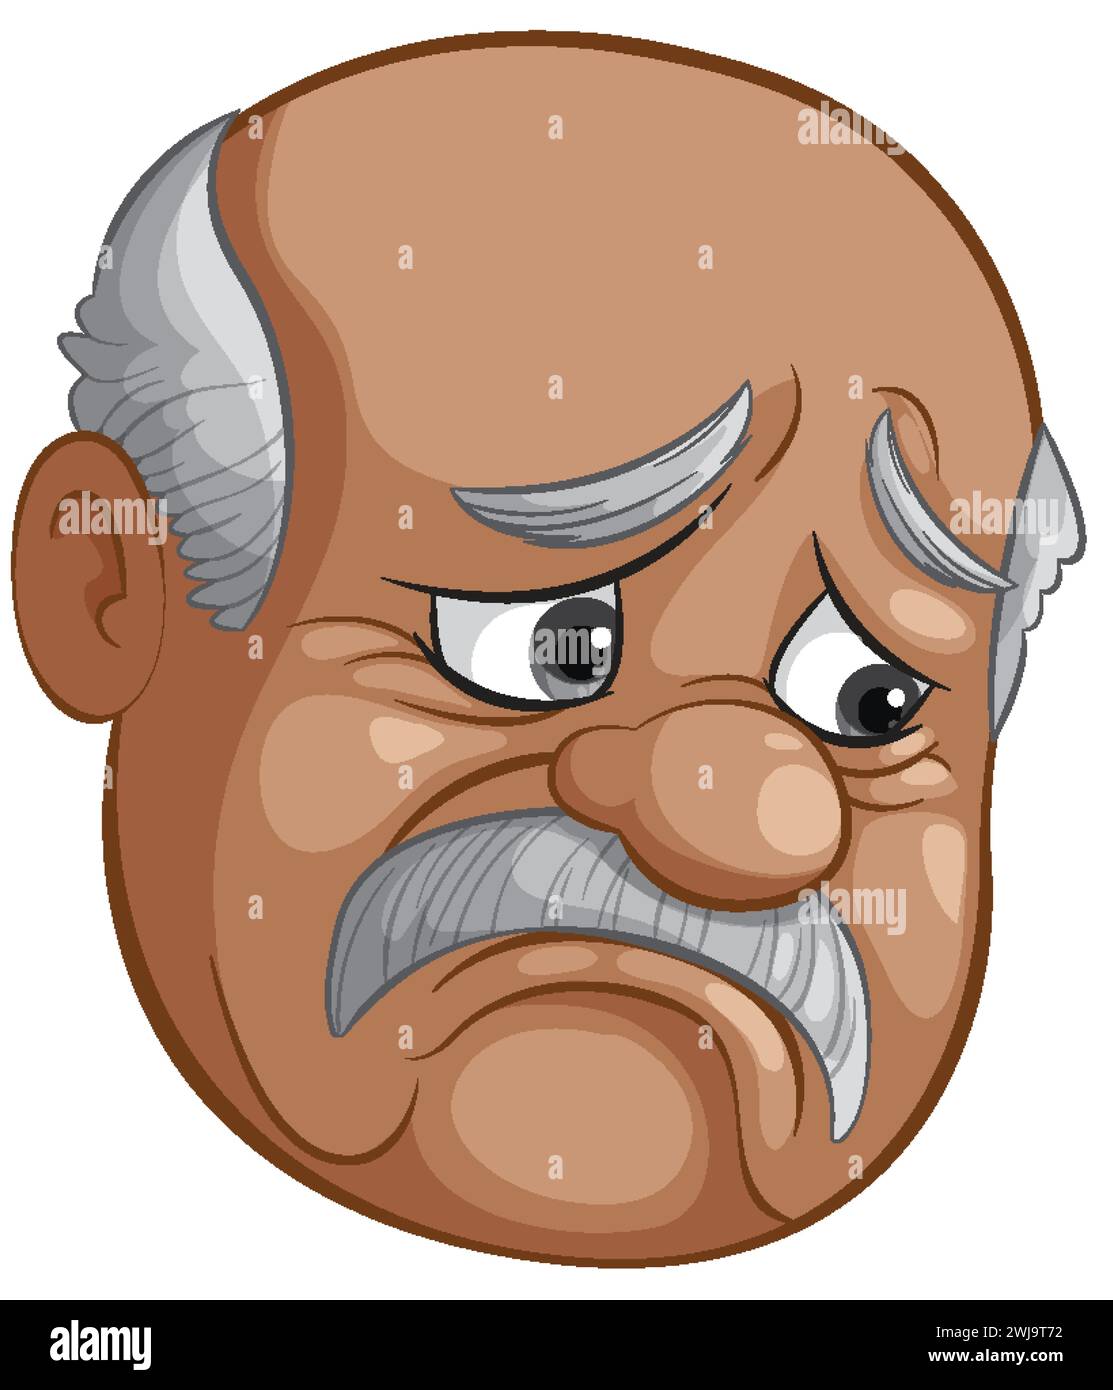 Cartoon of a concerned, elderly gentleman's face Stock Vector